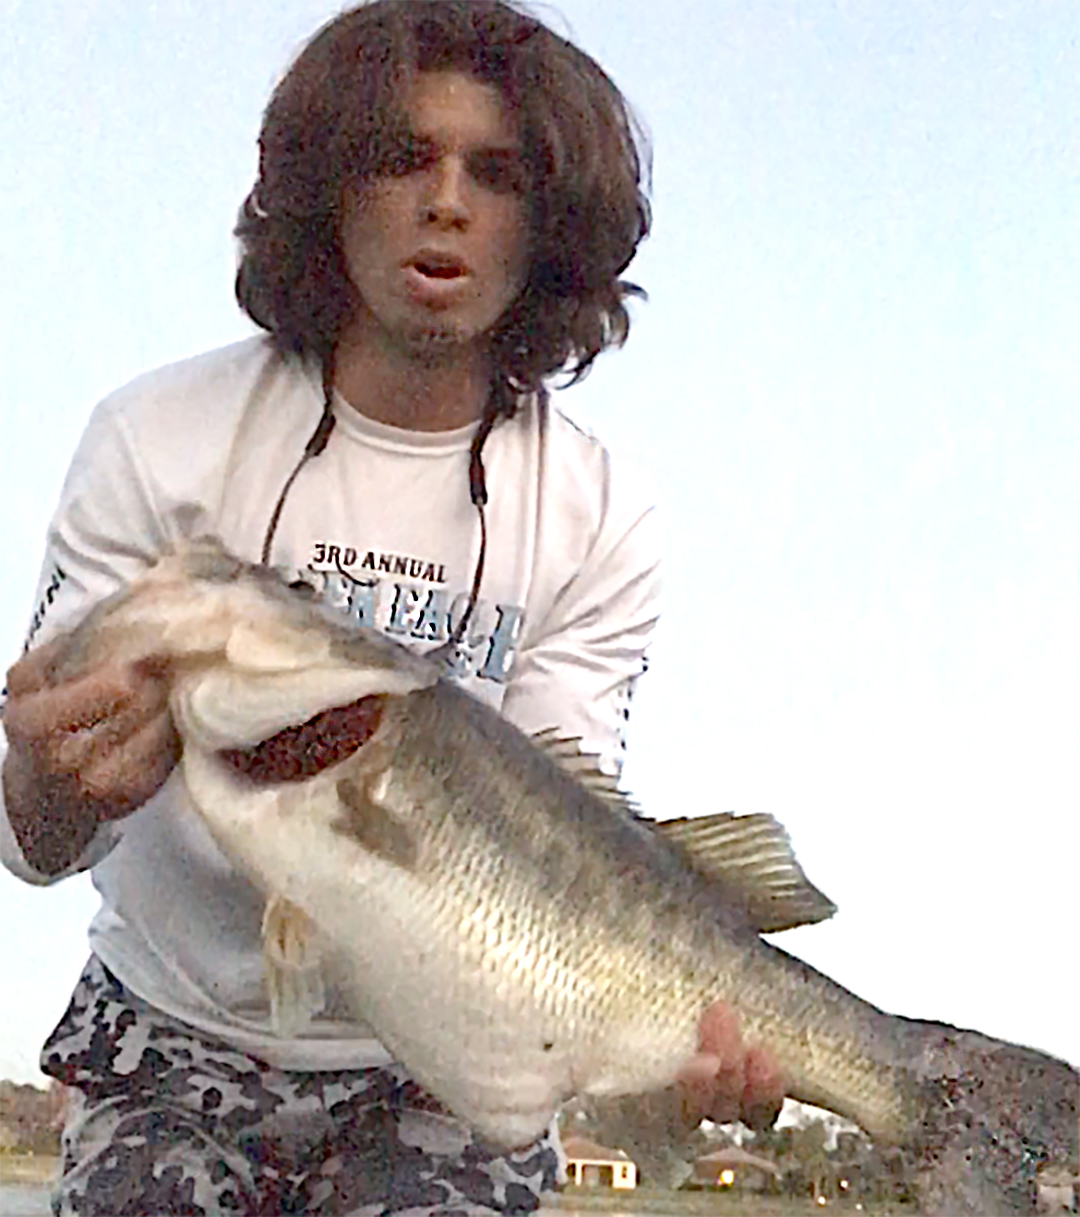 Trophy Catch: Florida Angler Nets Near Record Bass